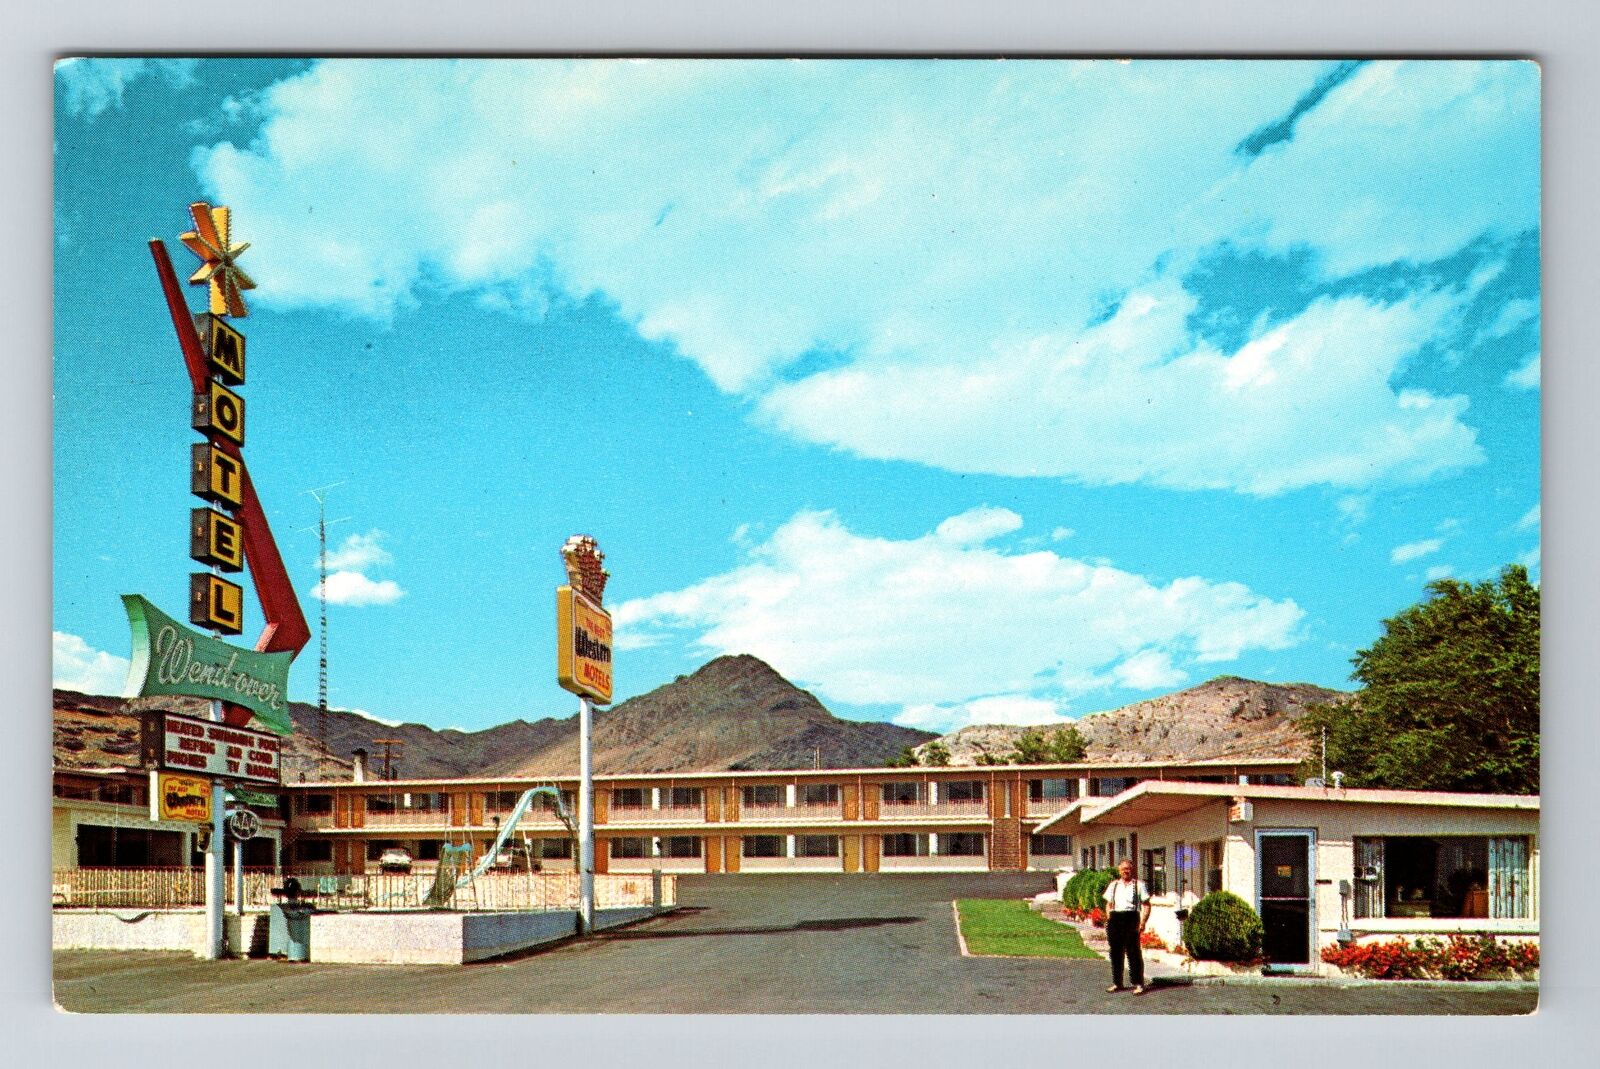 Wendover UT-Utah, Wend-Over Motel, Antique Vintage Souvenir Postcard